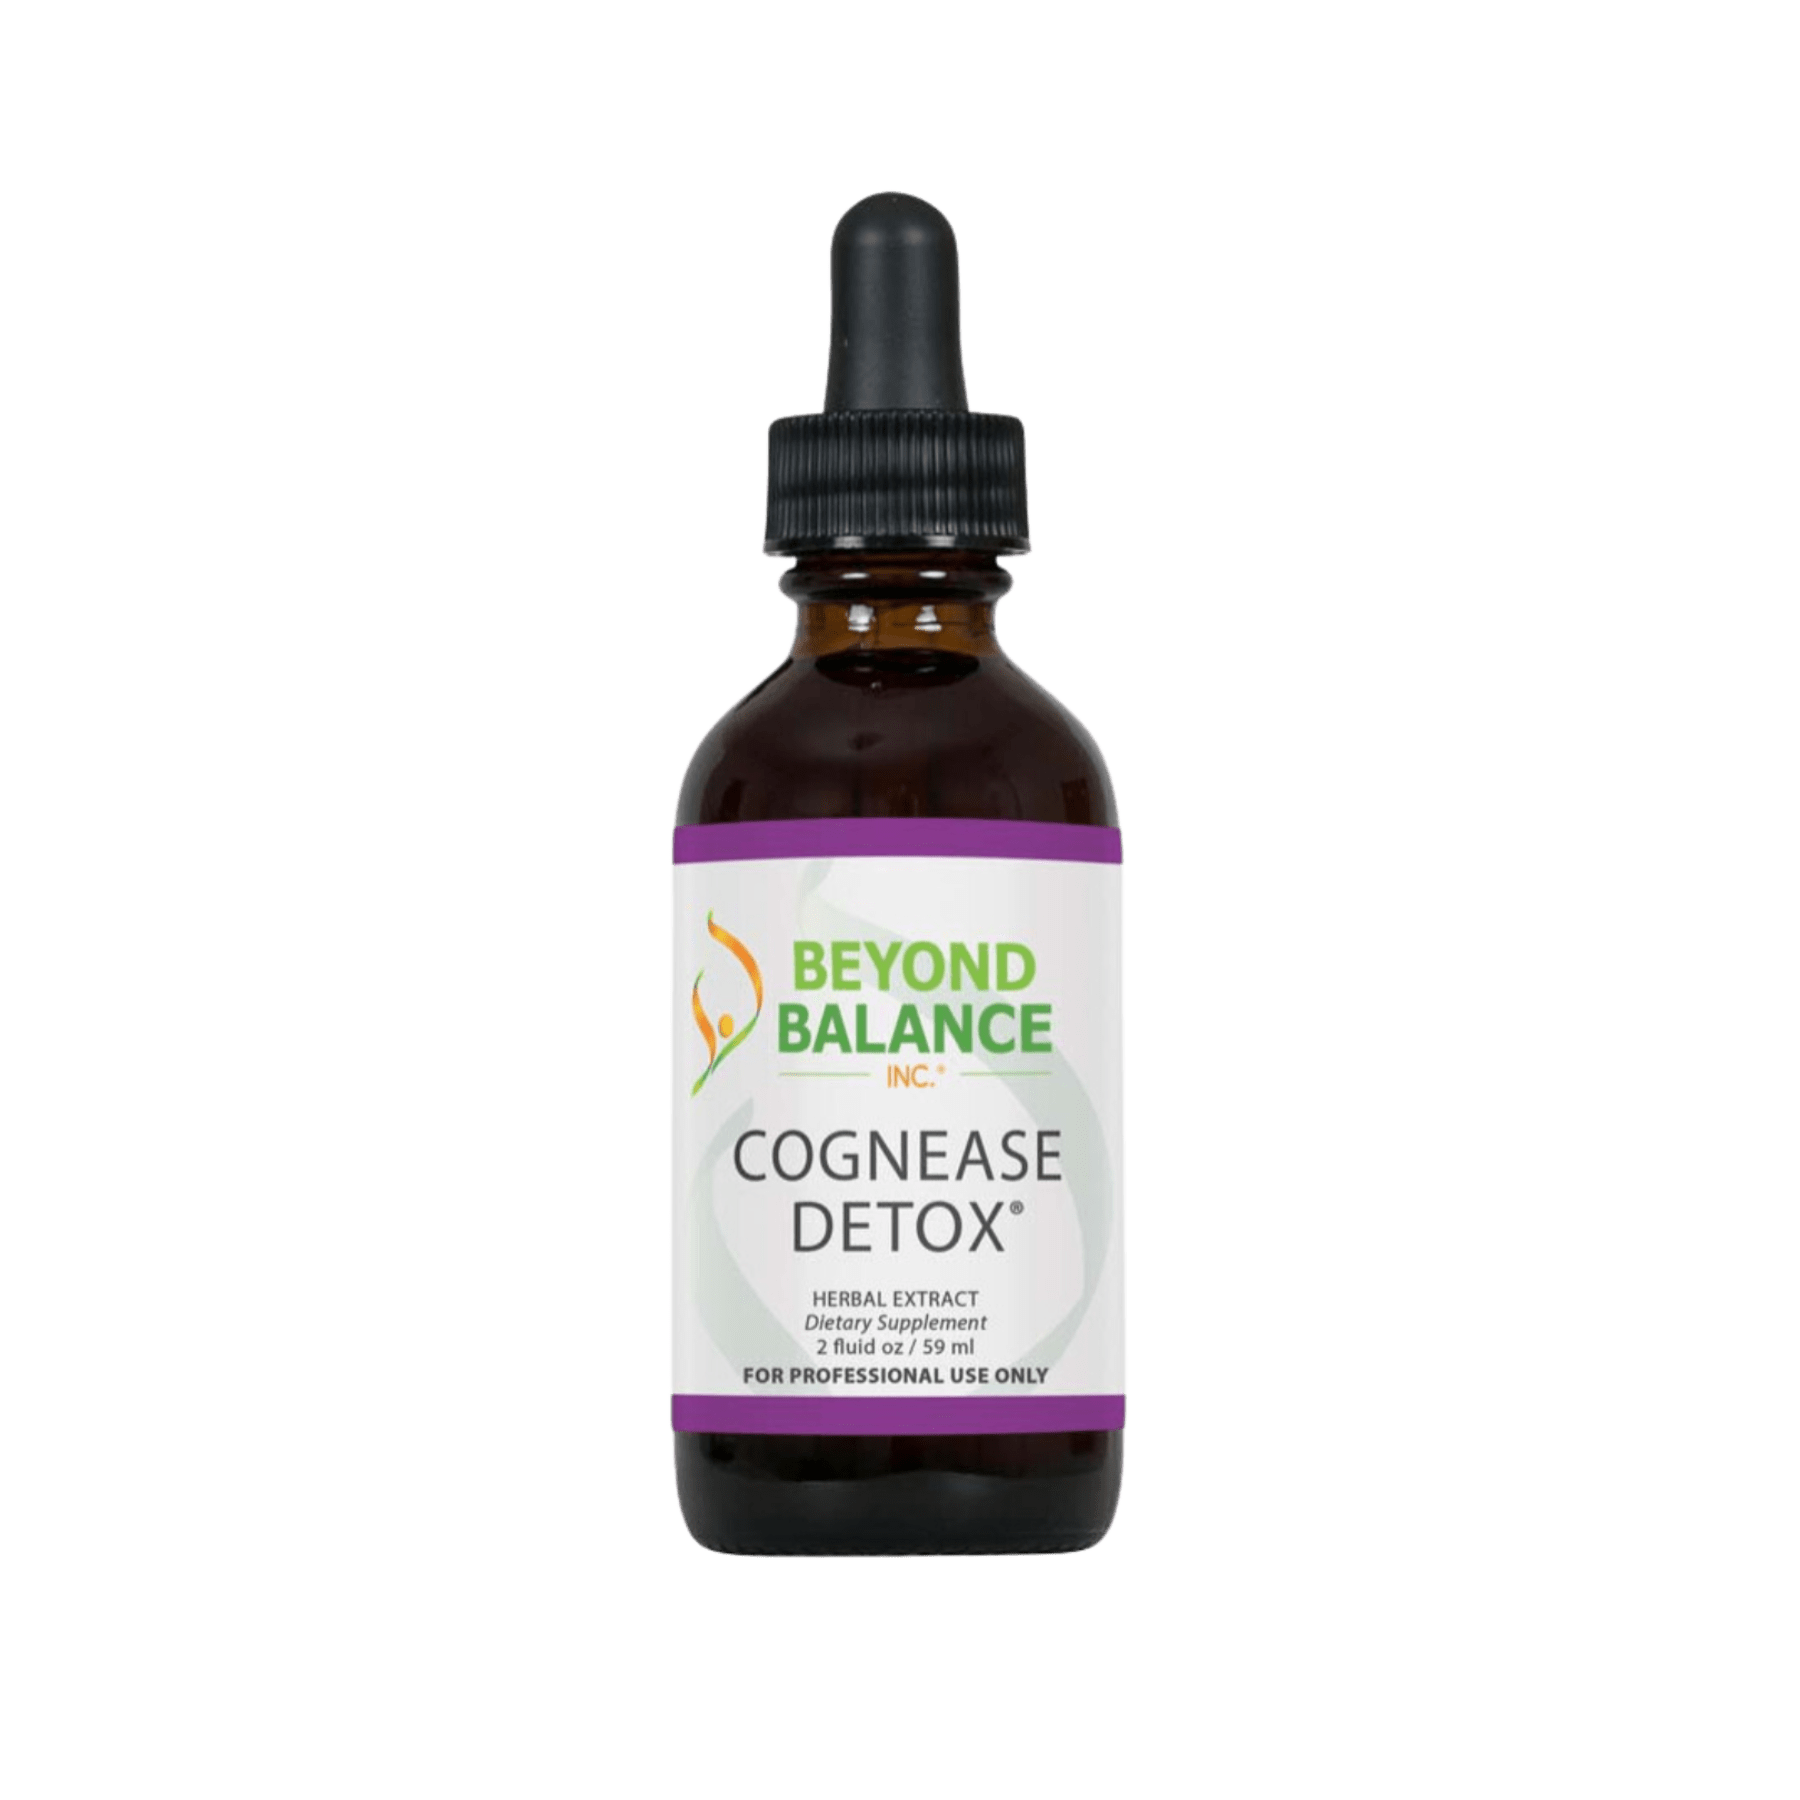 Beyond Balance Cognease Detox Herbal Extract